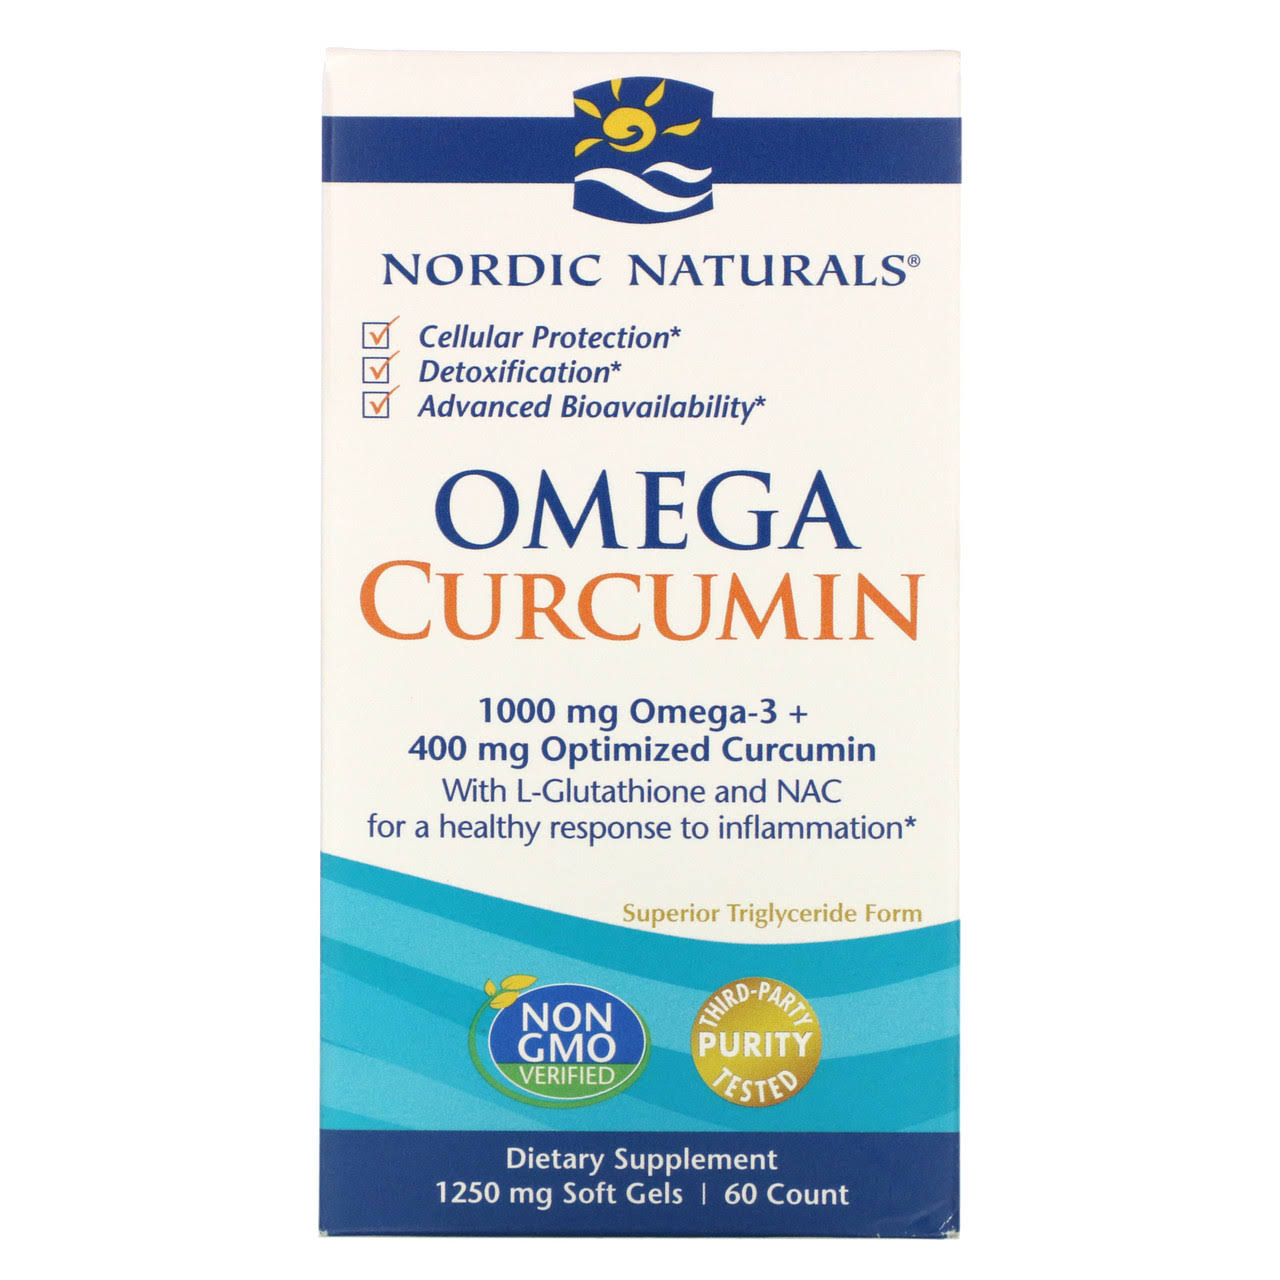 Nordic Naturals Omega Curcumin Dietary Supplement - 1250mg, 60ct